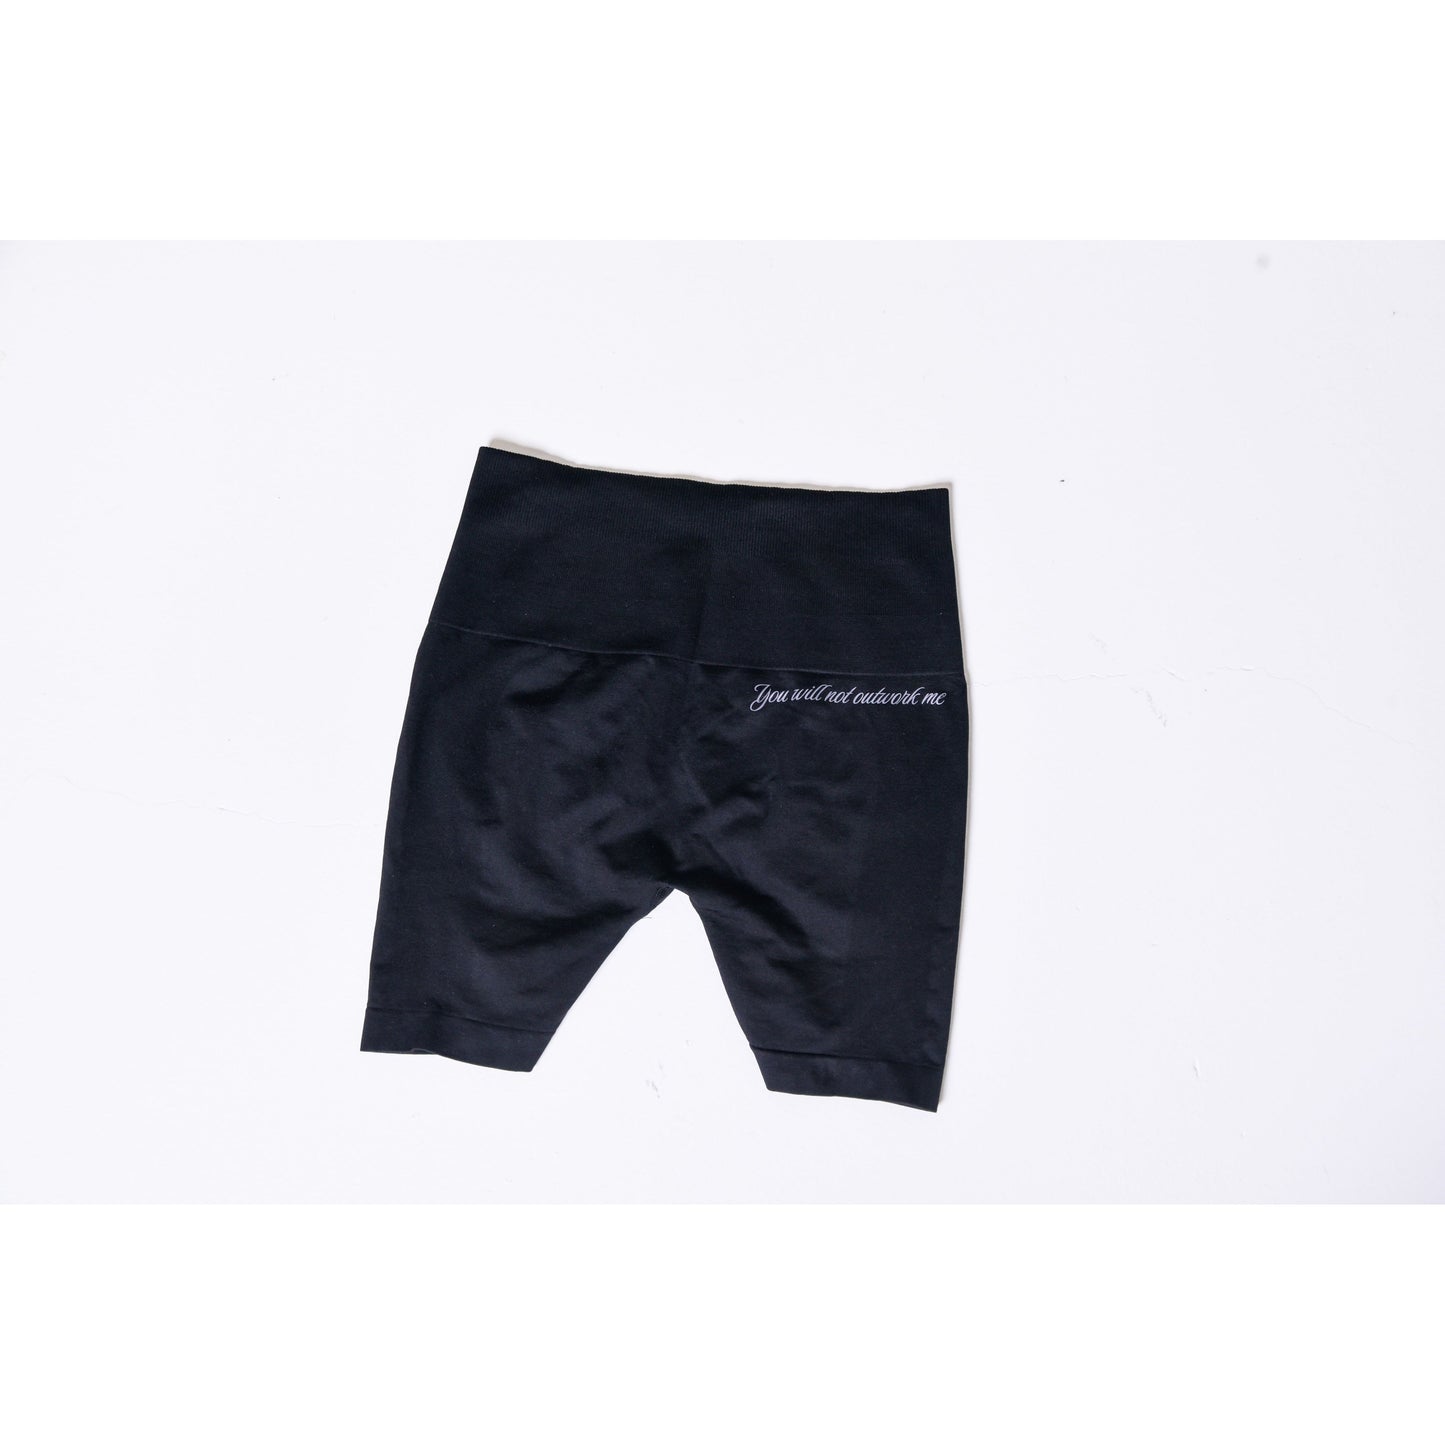 Blackberry Seamless Shorts